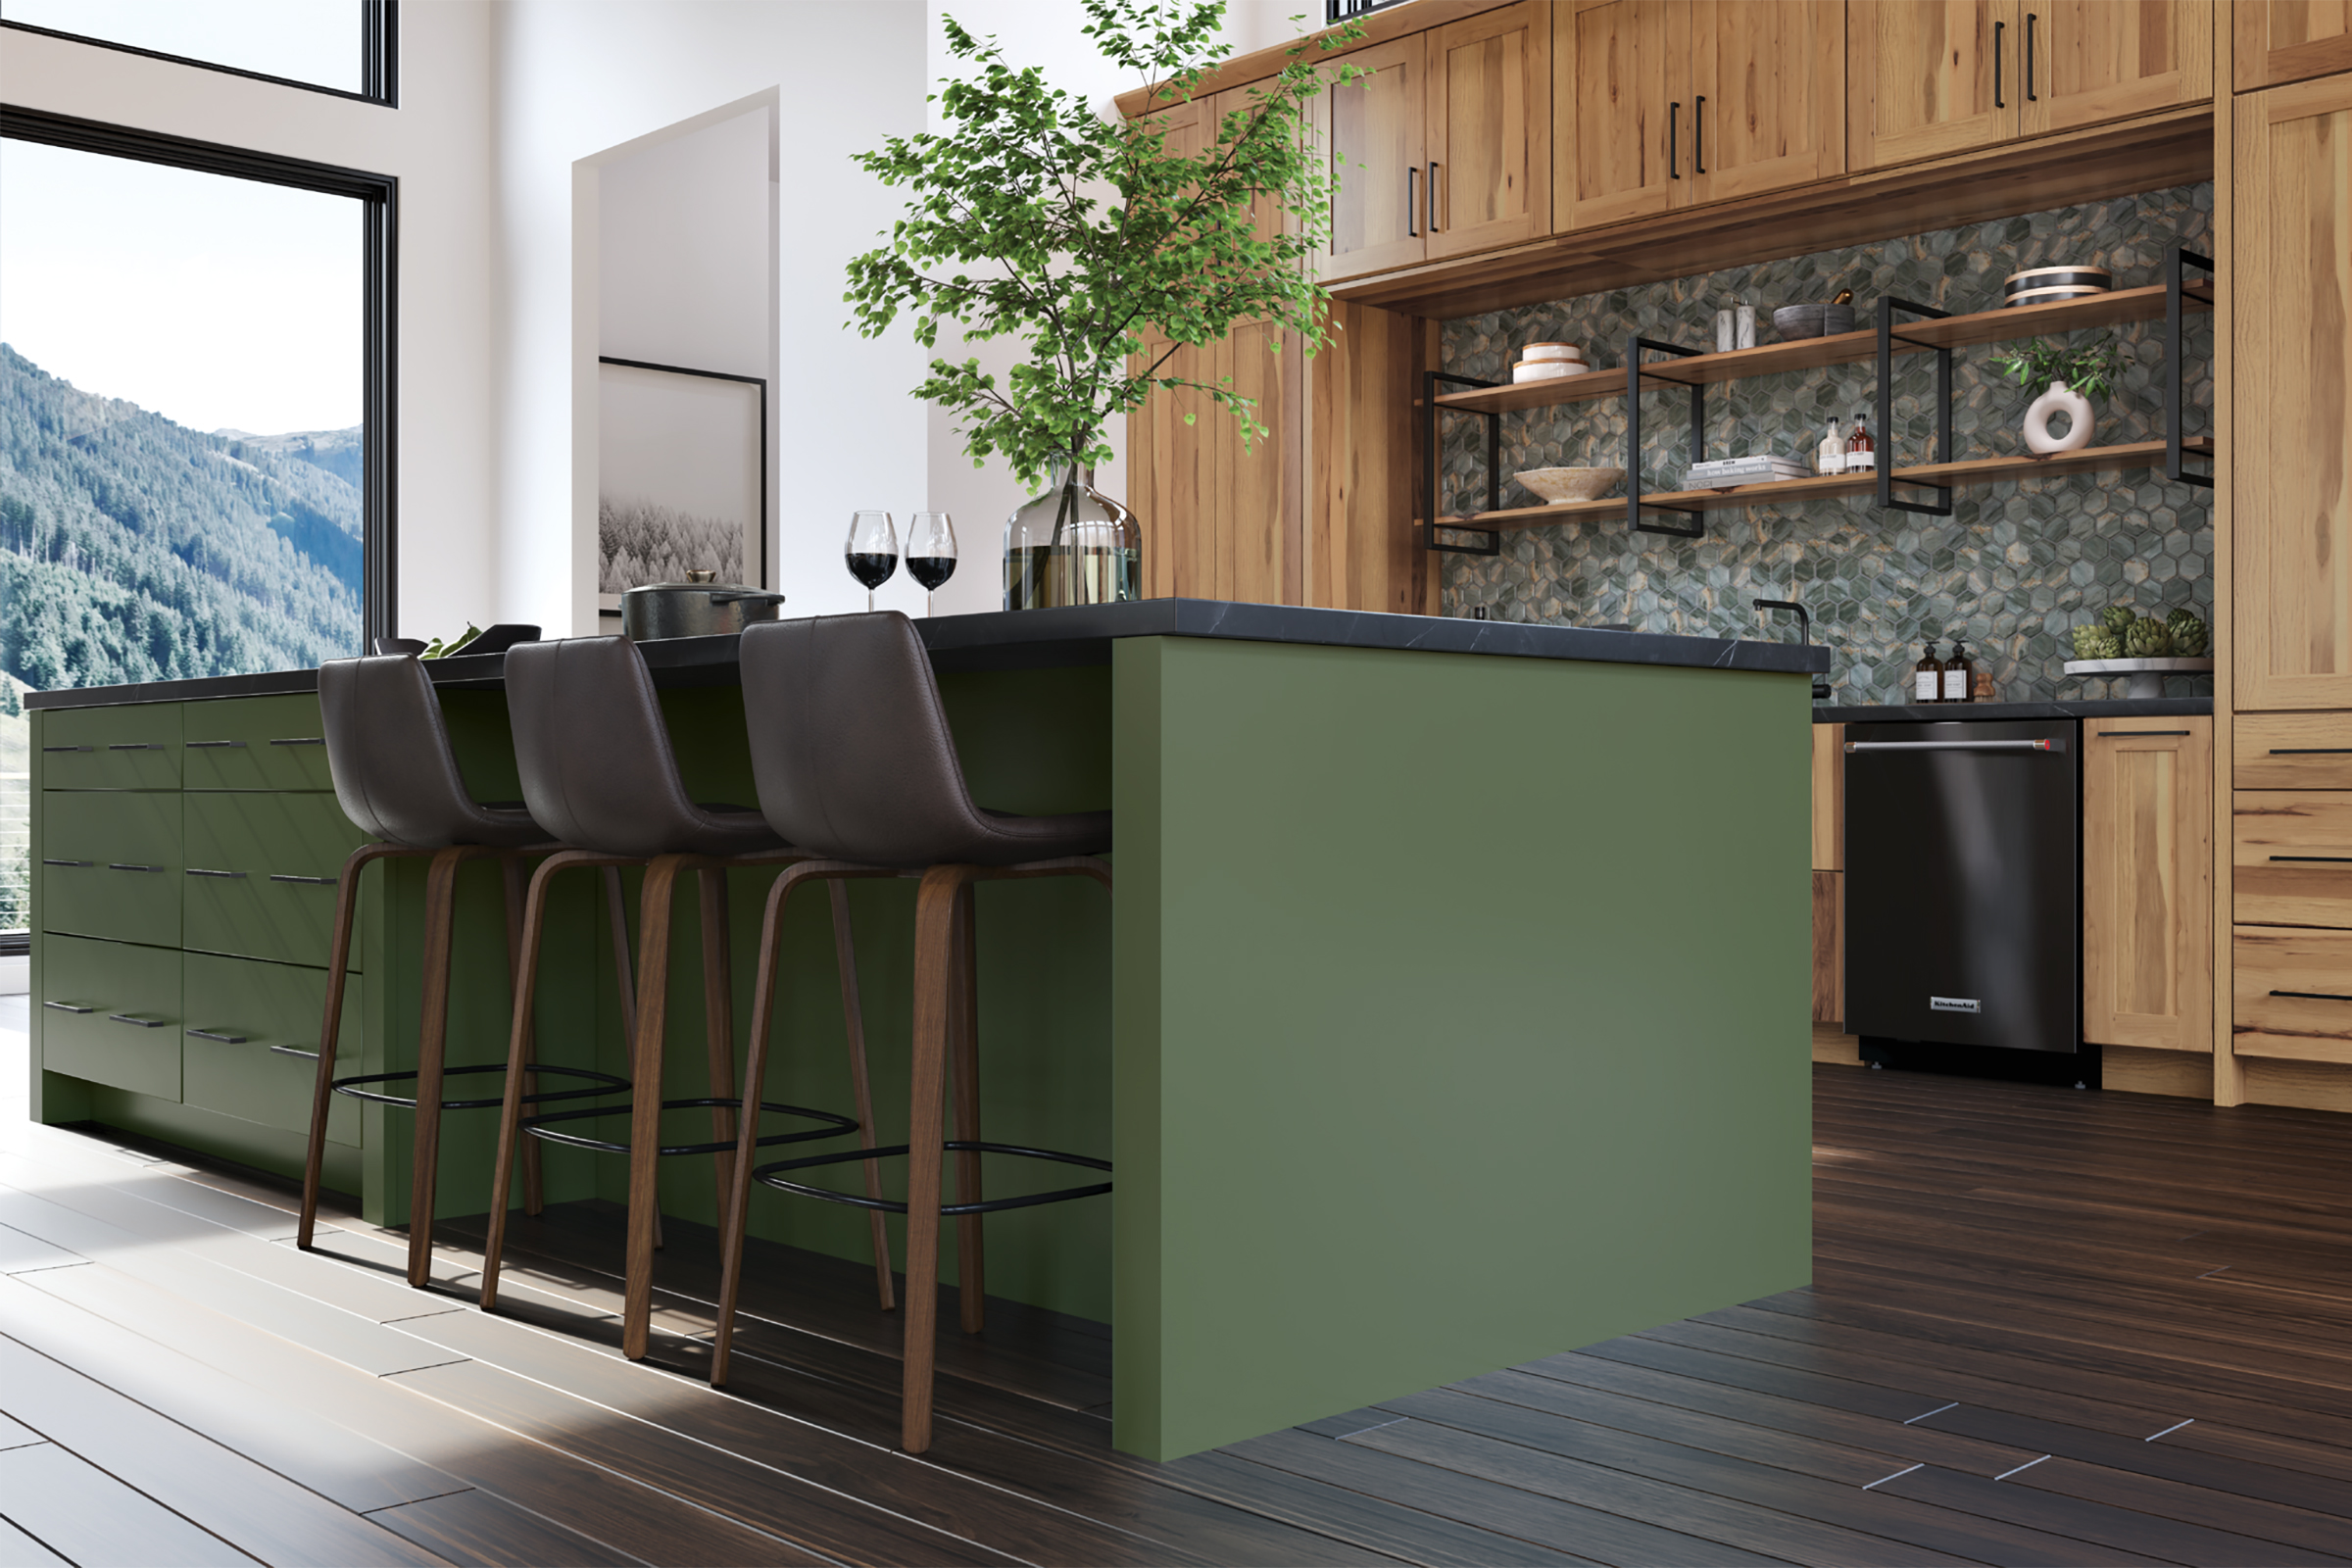 KraftMaid Evergreen dark green kitchen island with hickory woodgrain cabinets